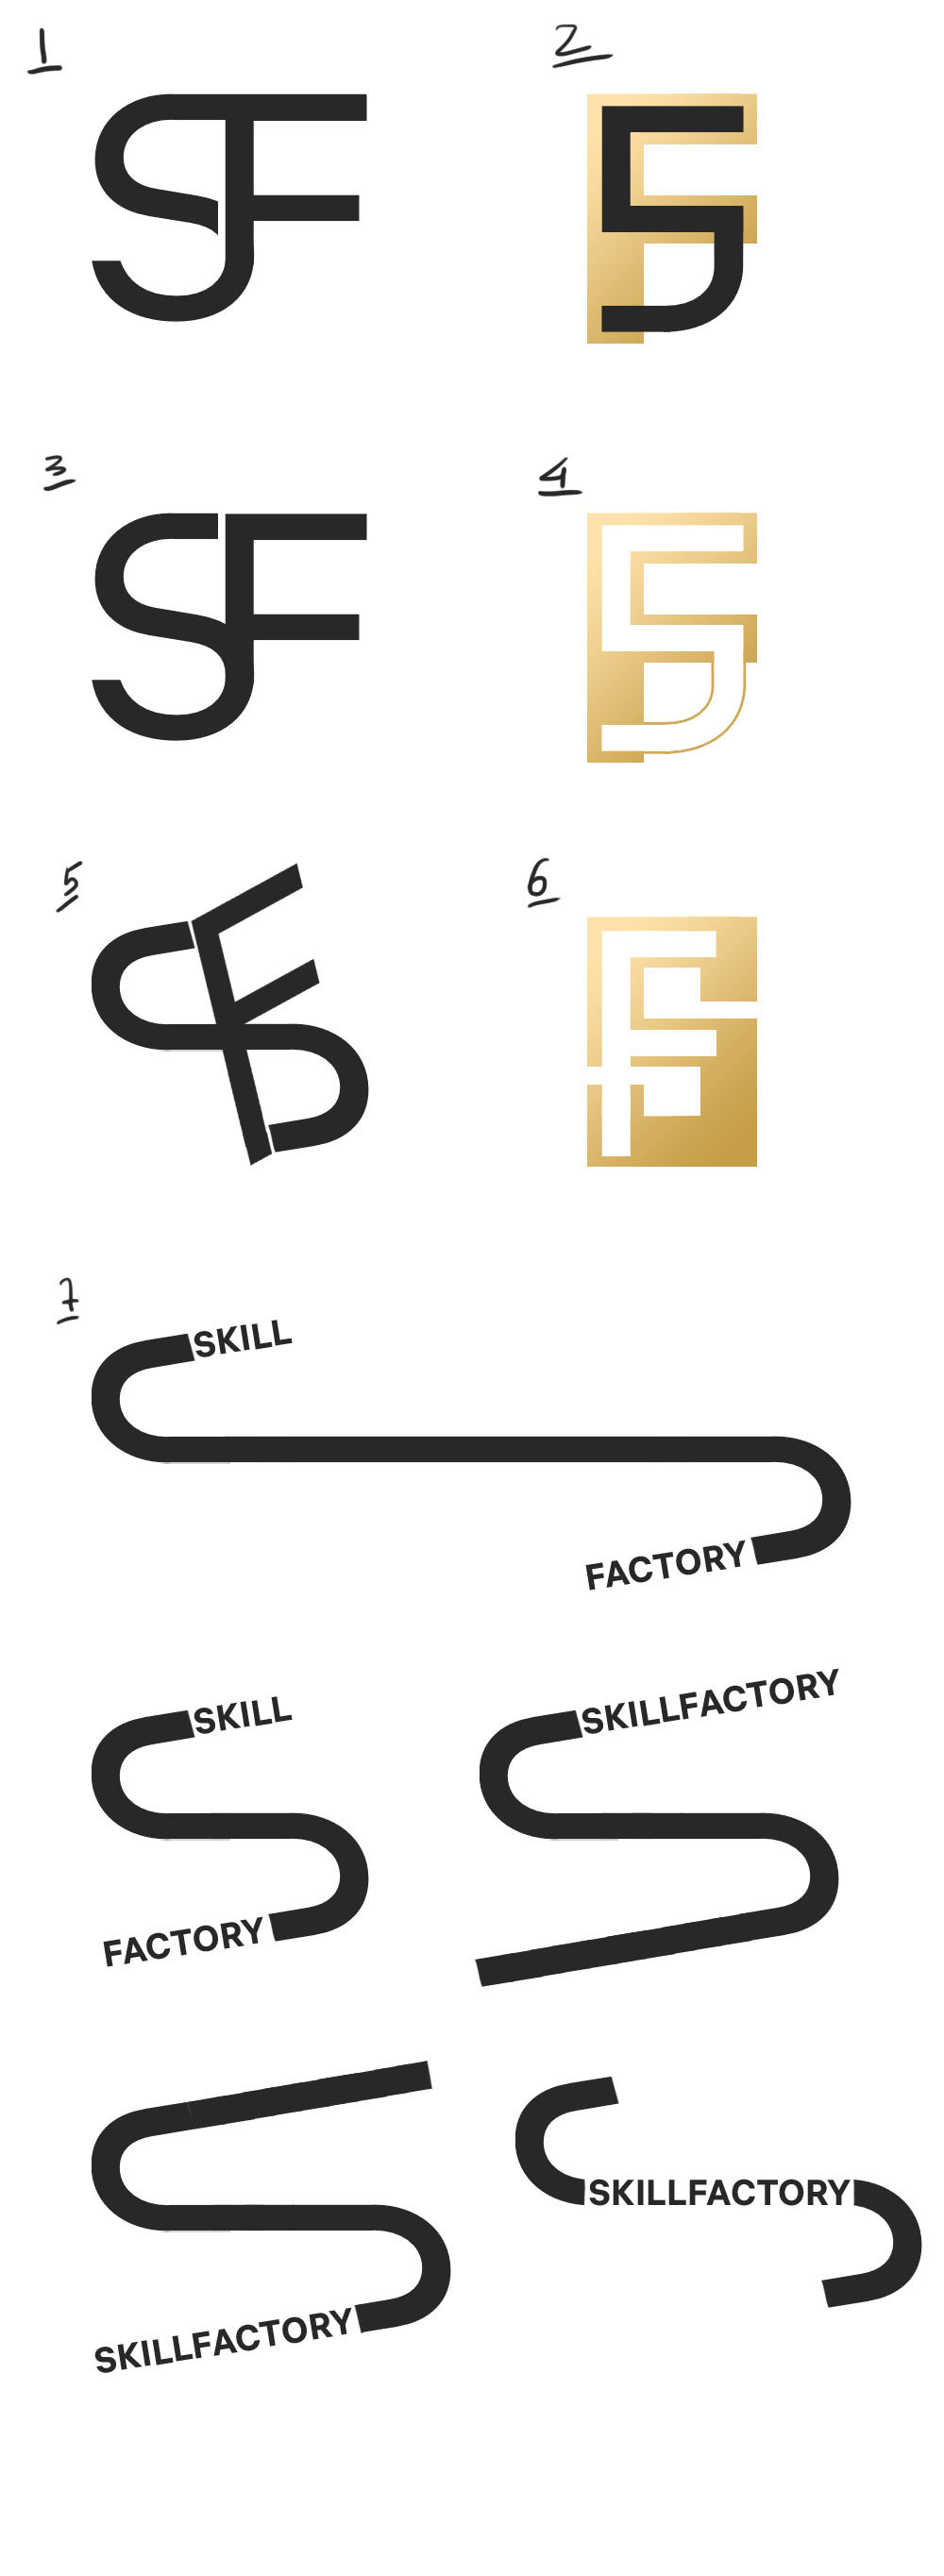 skillfactory process 07